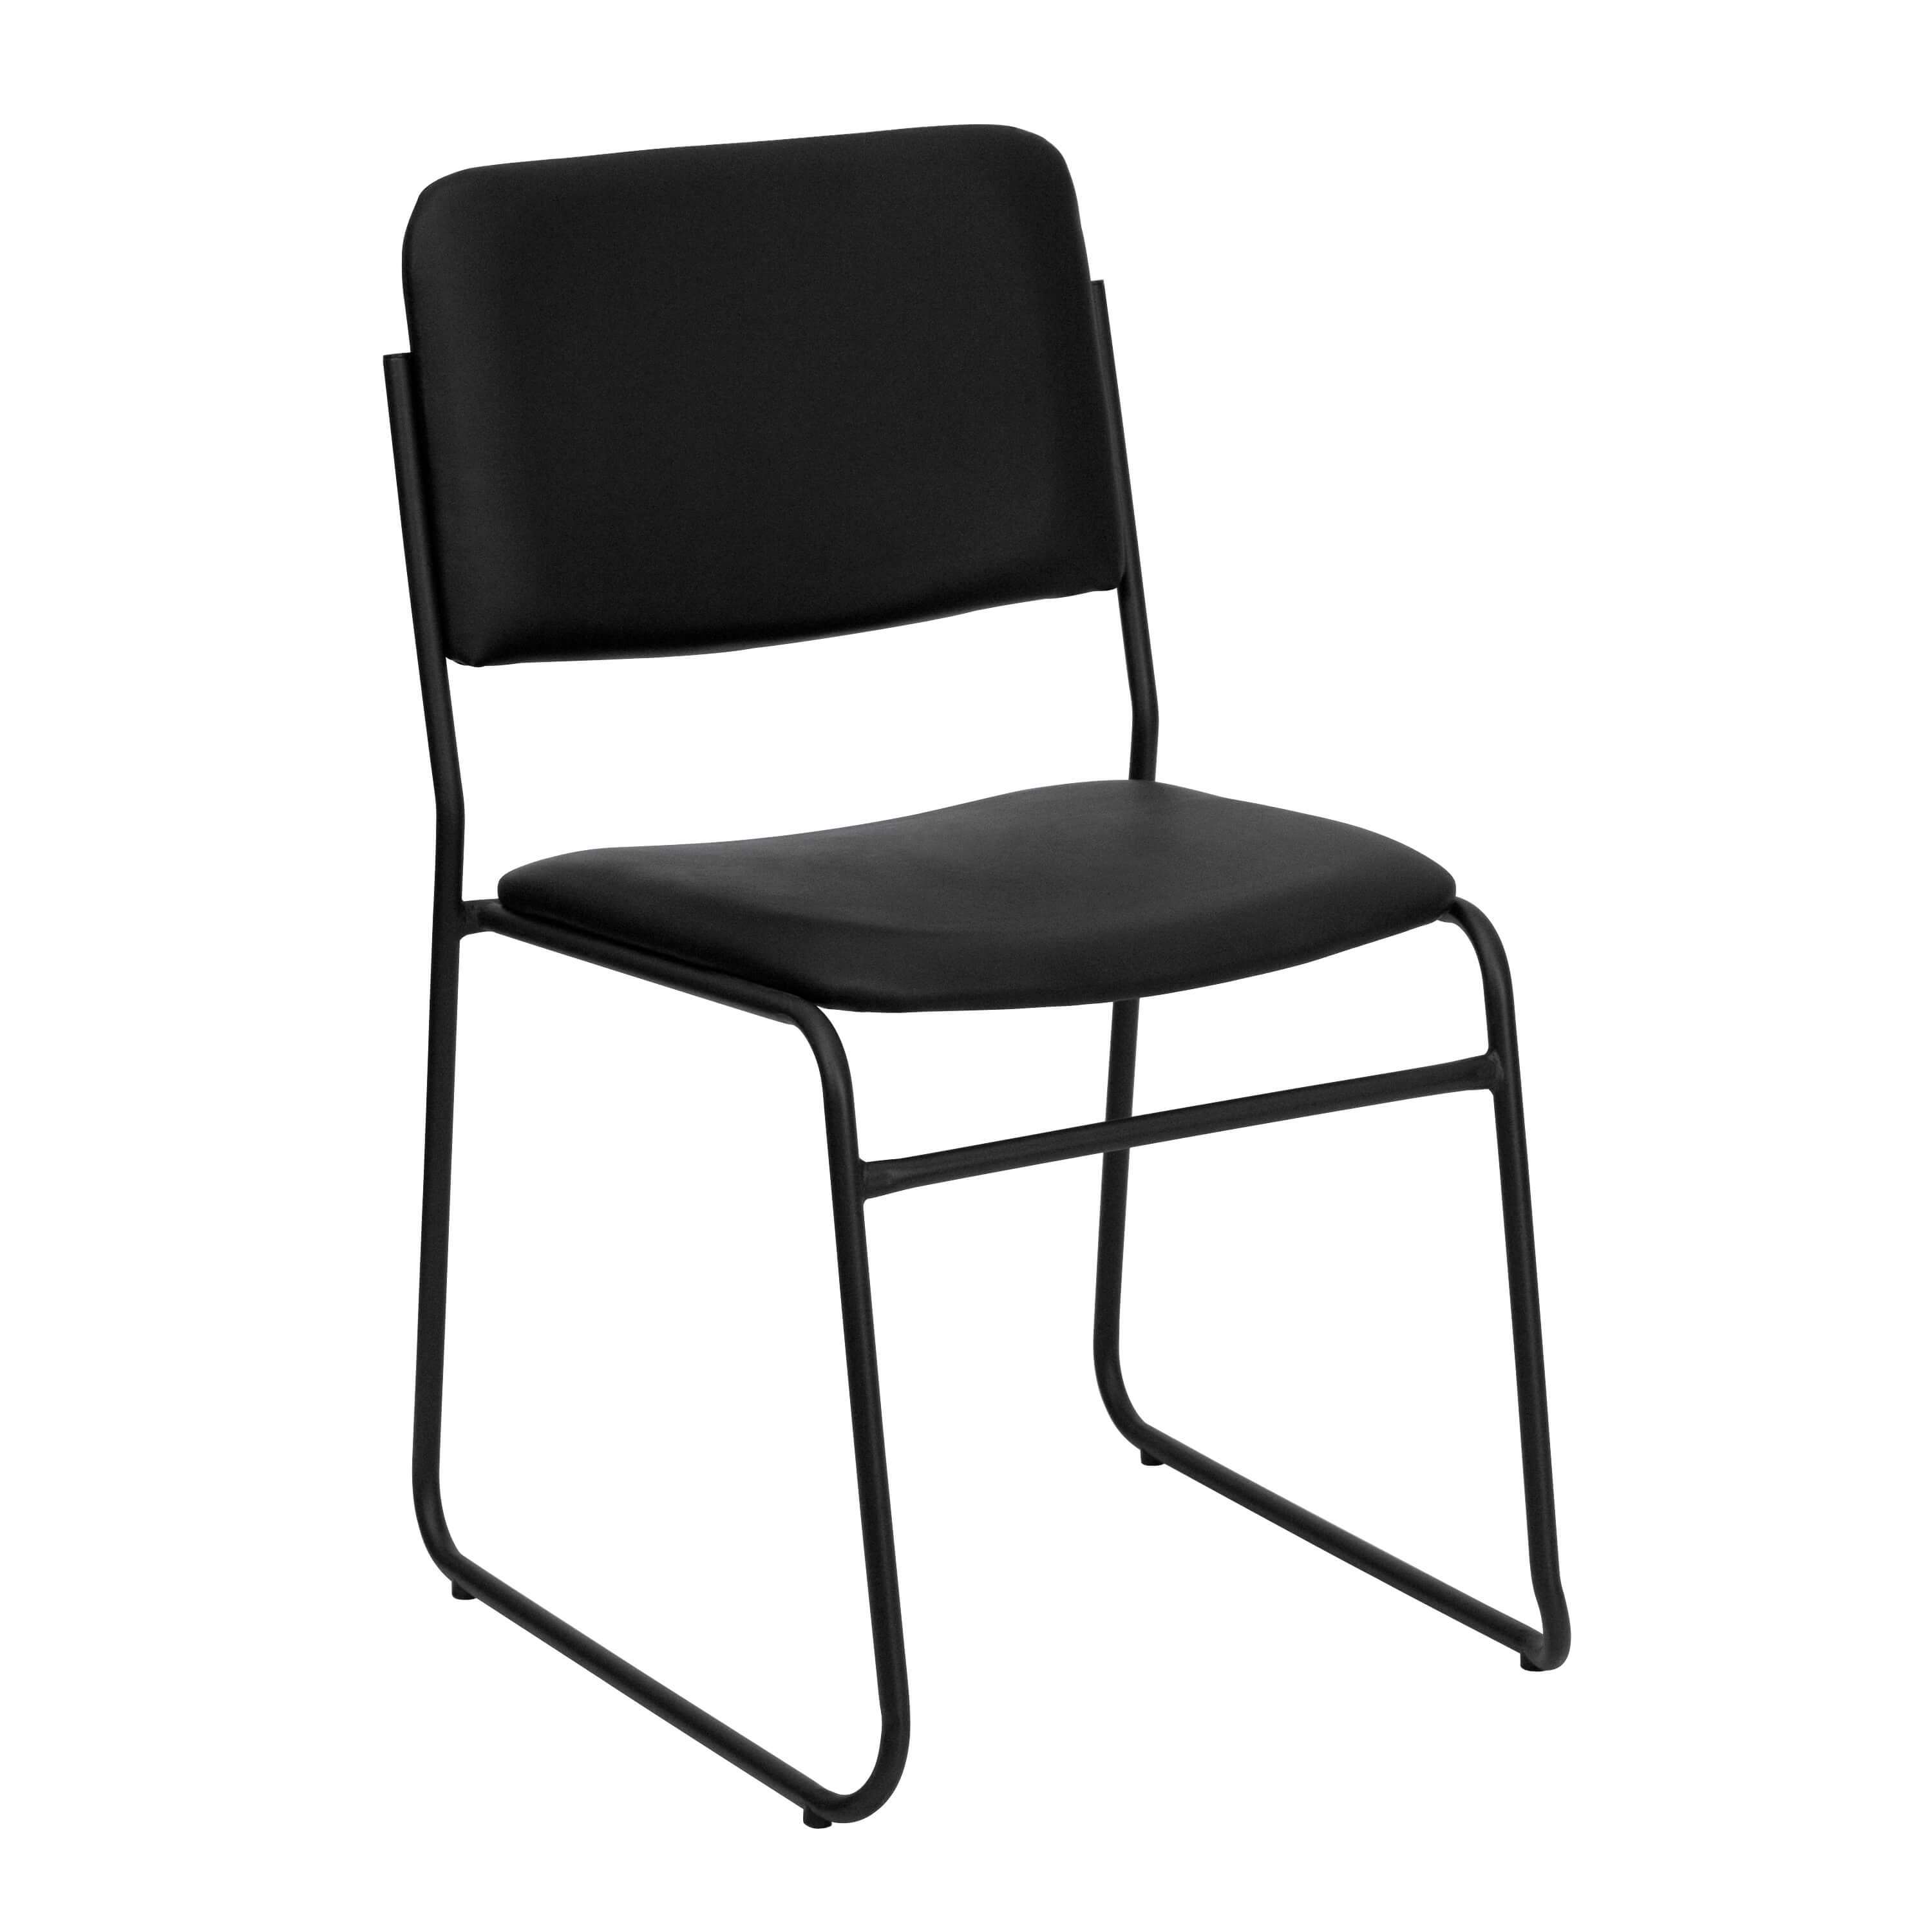 Stackable chairs CUB XU 8700 BLK B VYL 30 GG FLA